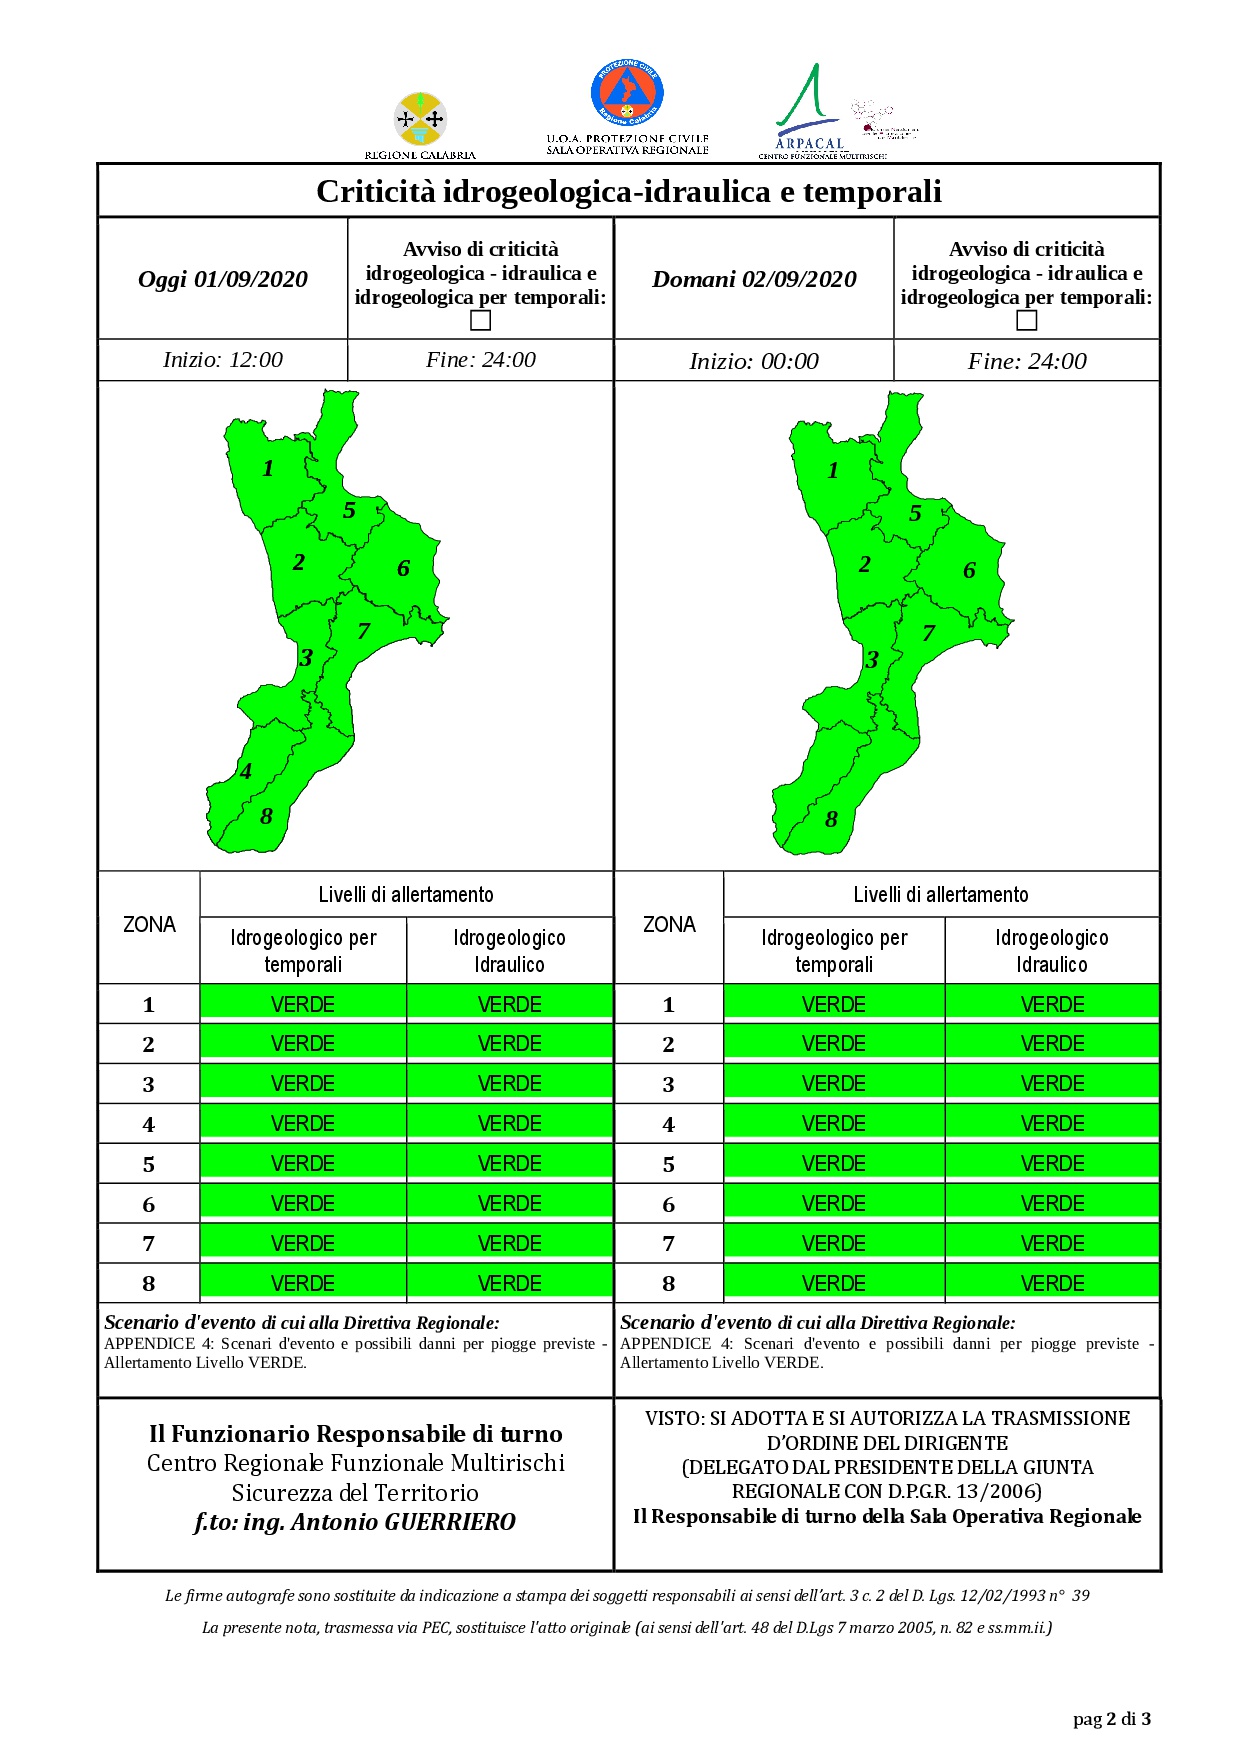 Criticità idrogeologica-idraulica e temporali in Calabria 01-09-2020